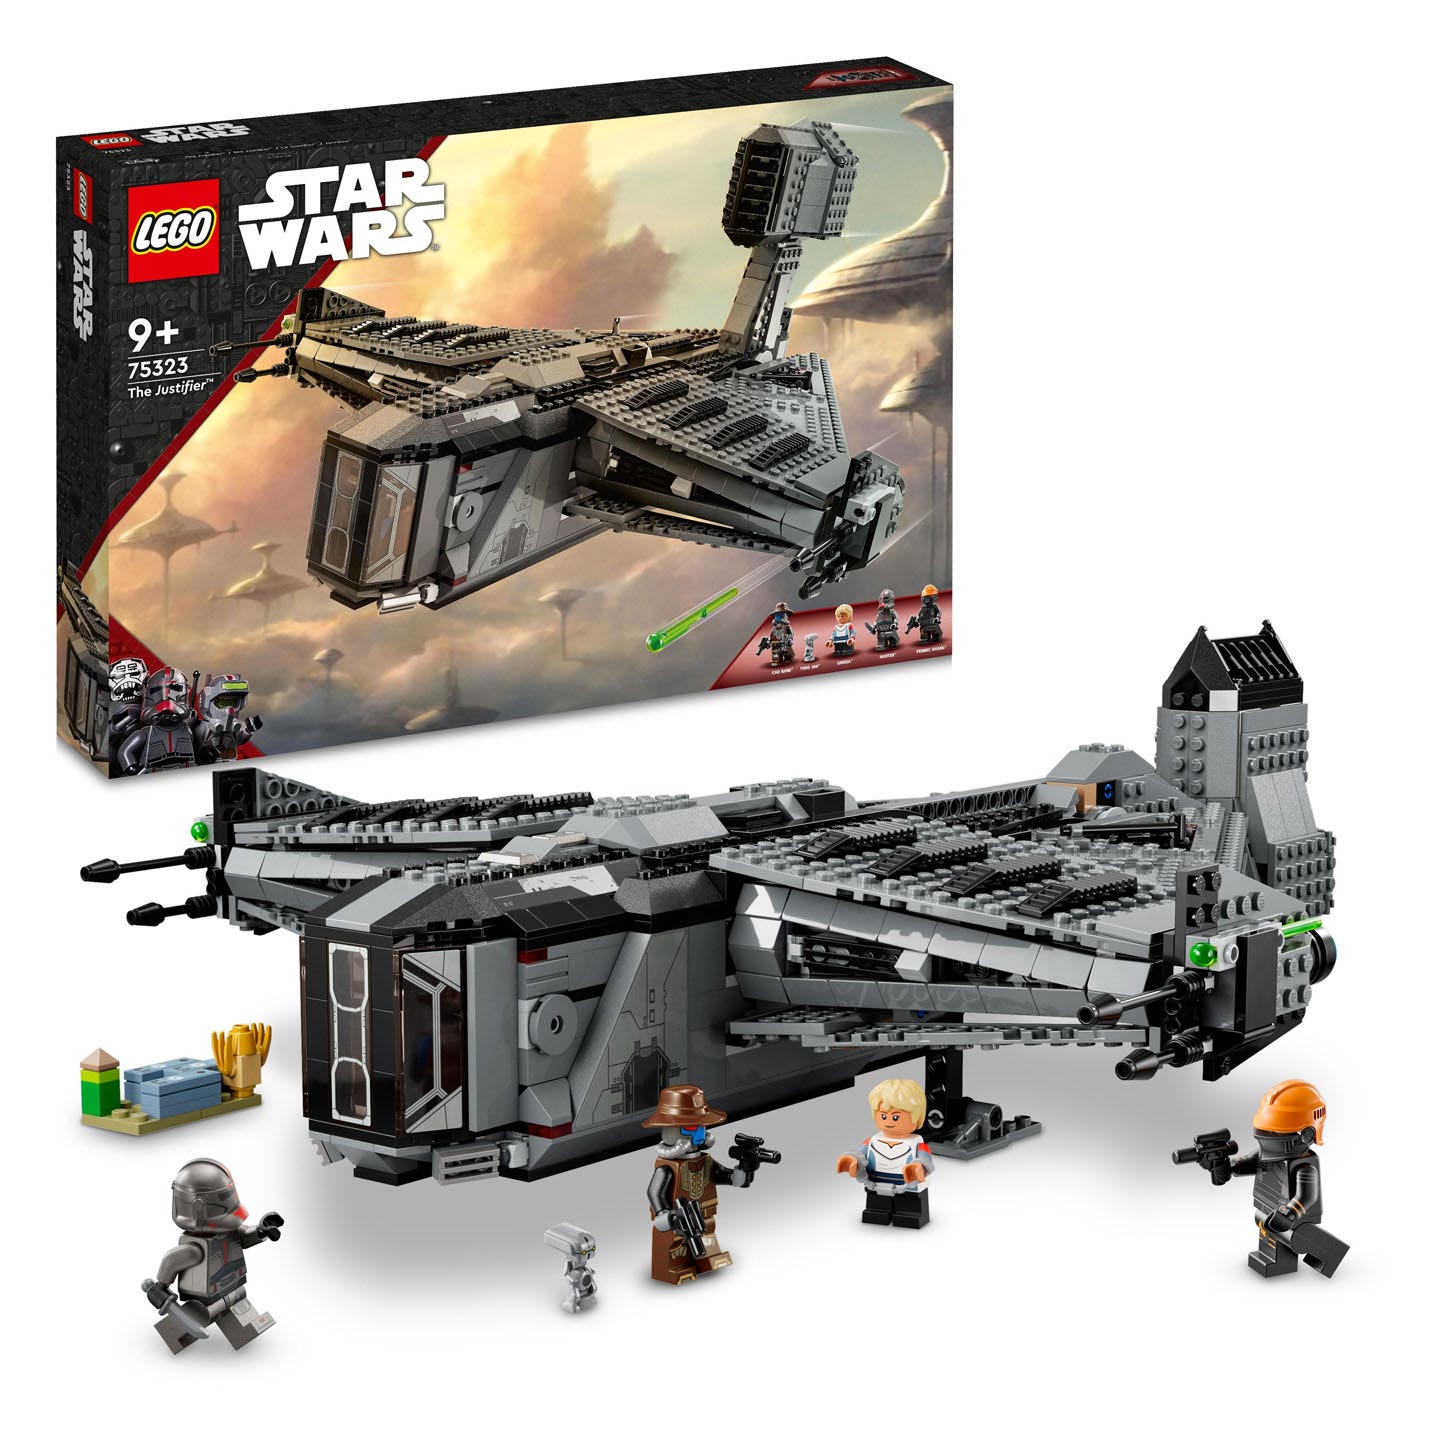 LEGO Star Wars 75323 The Justifier online kopen? |